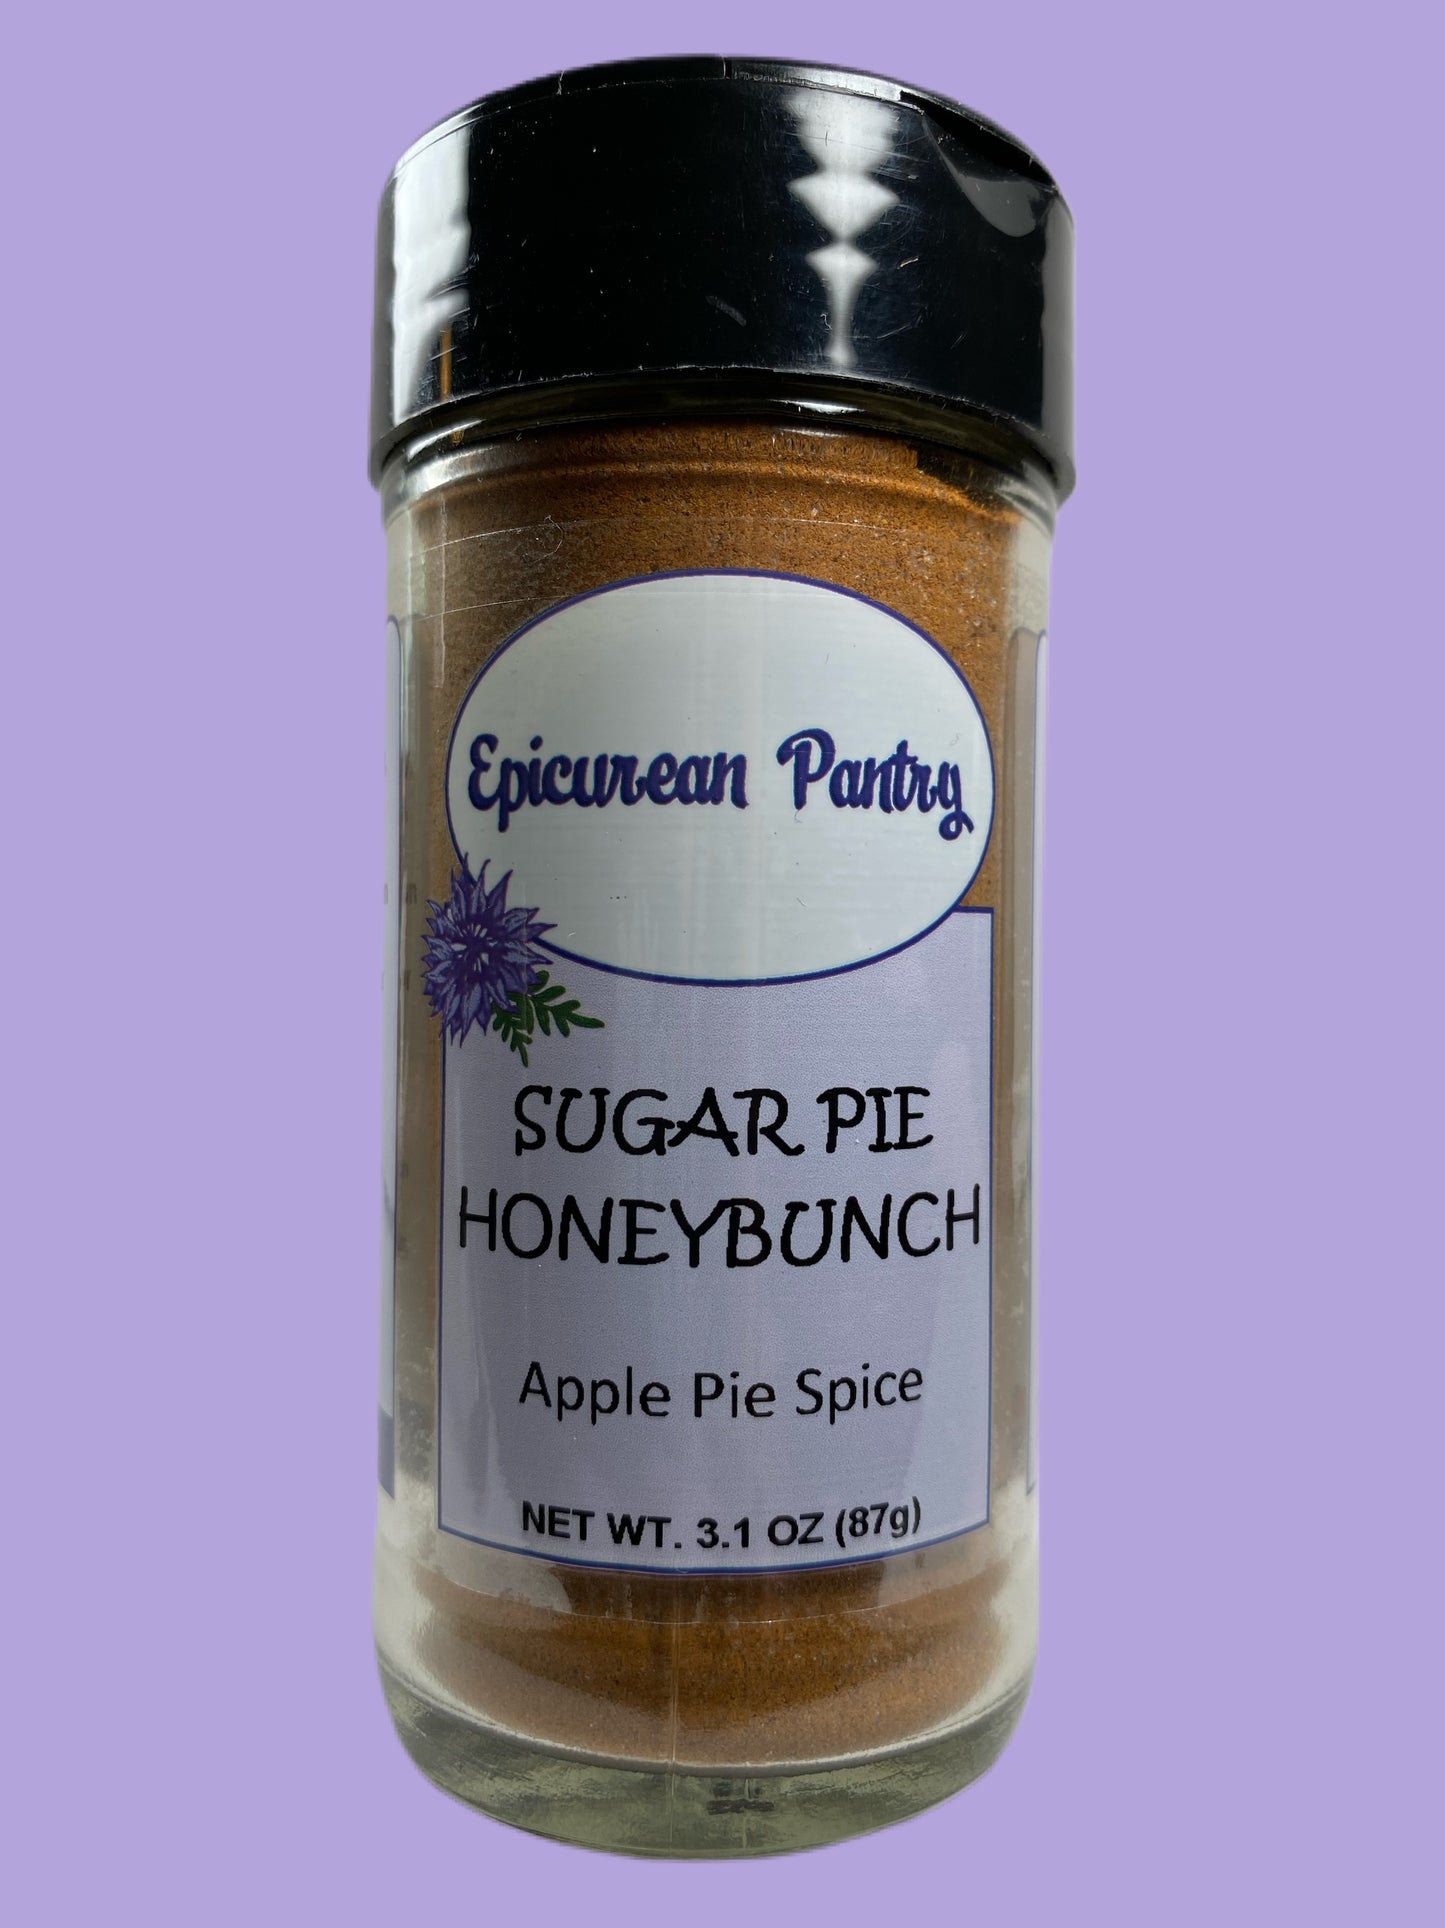 Sugar Pie Honeybunch - Apple Pie Spice - 3.1 oz net wt